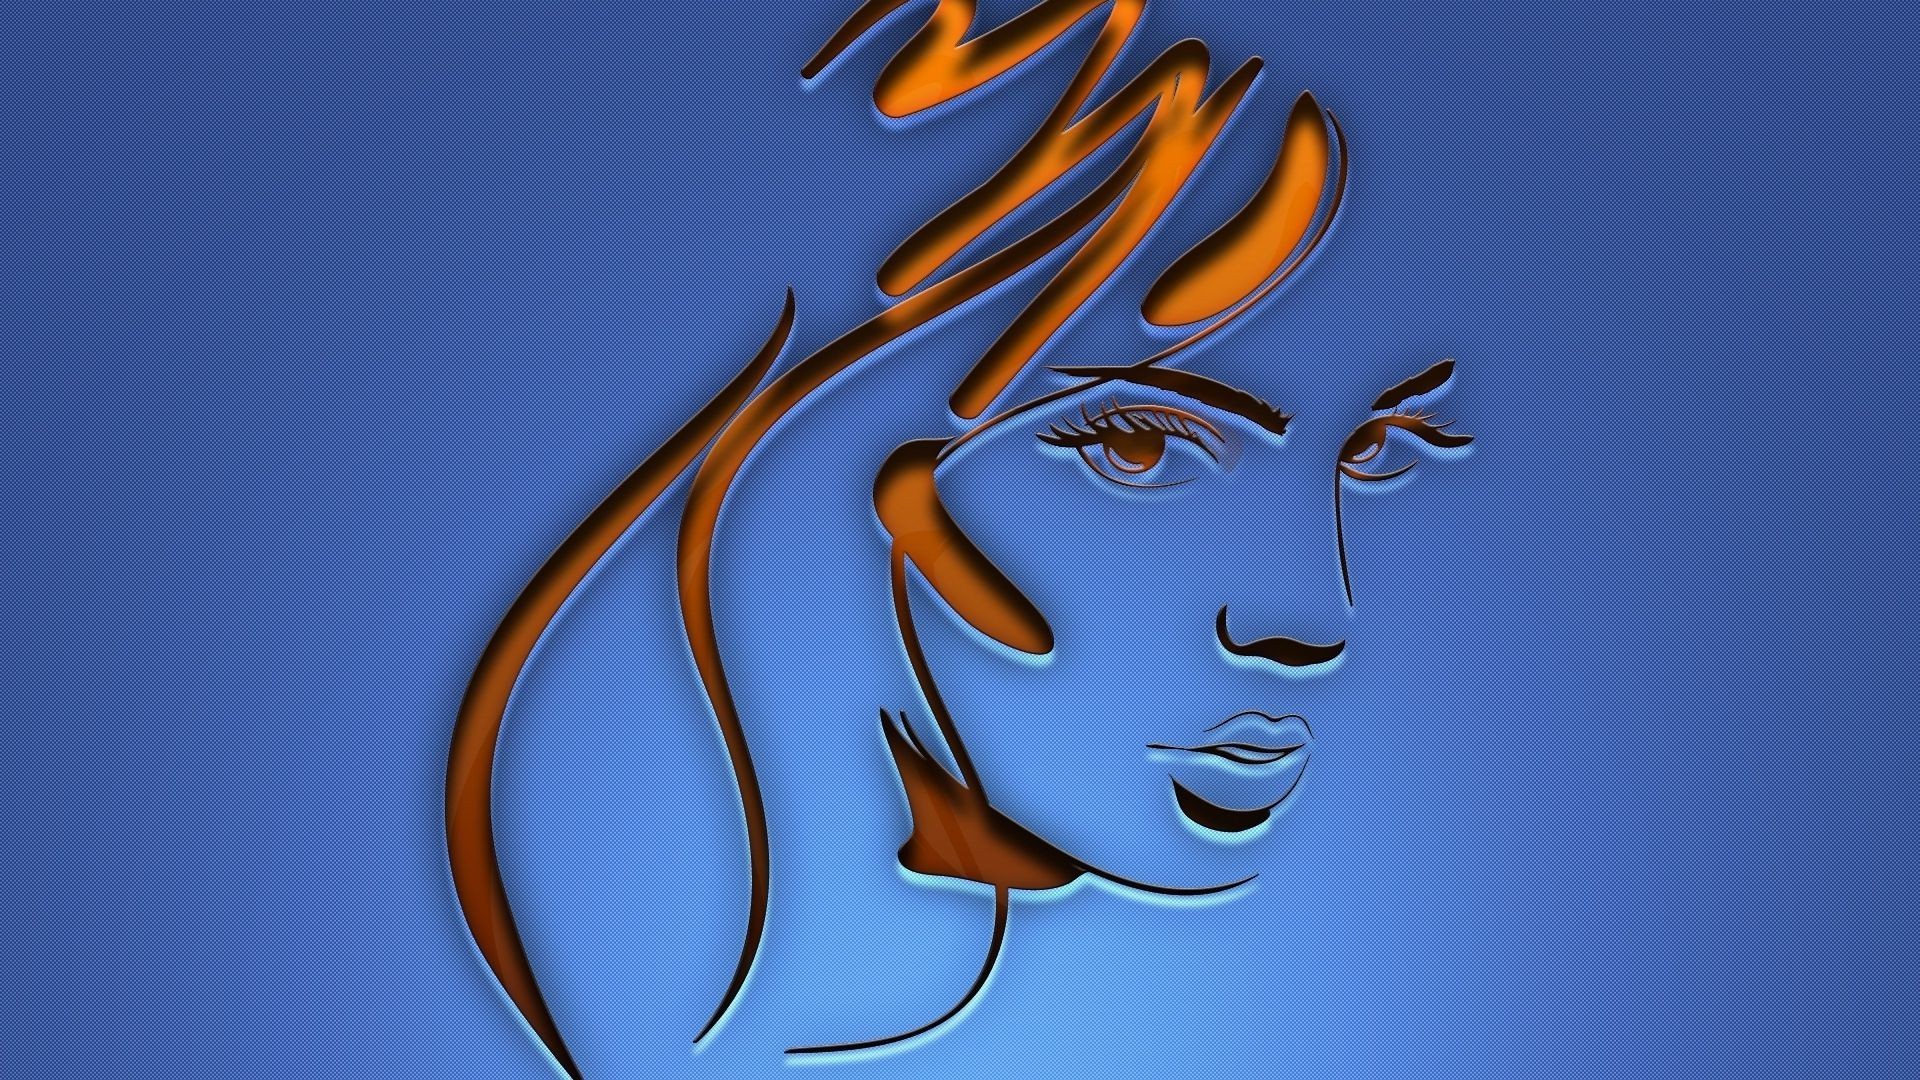 General 1920x1080 digital art blue background simple background minimalism women face long hair lines